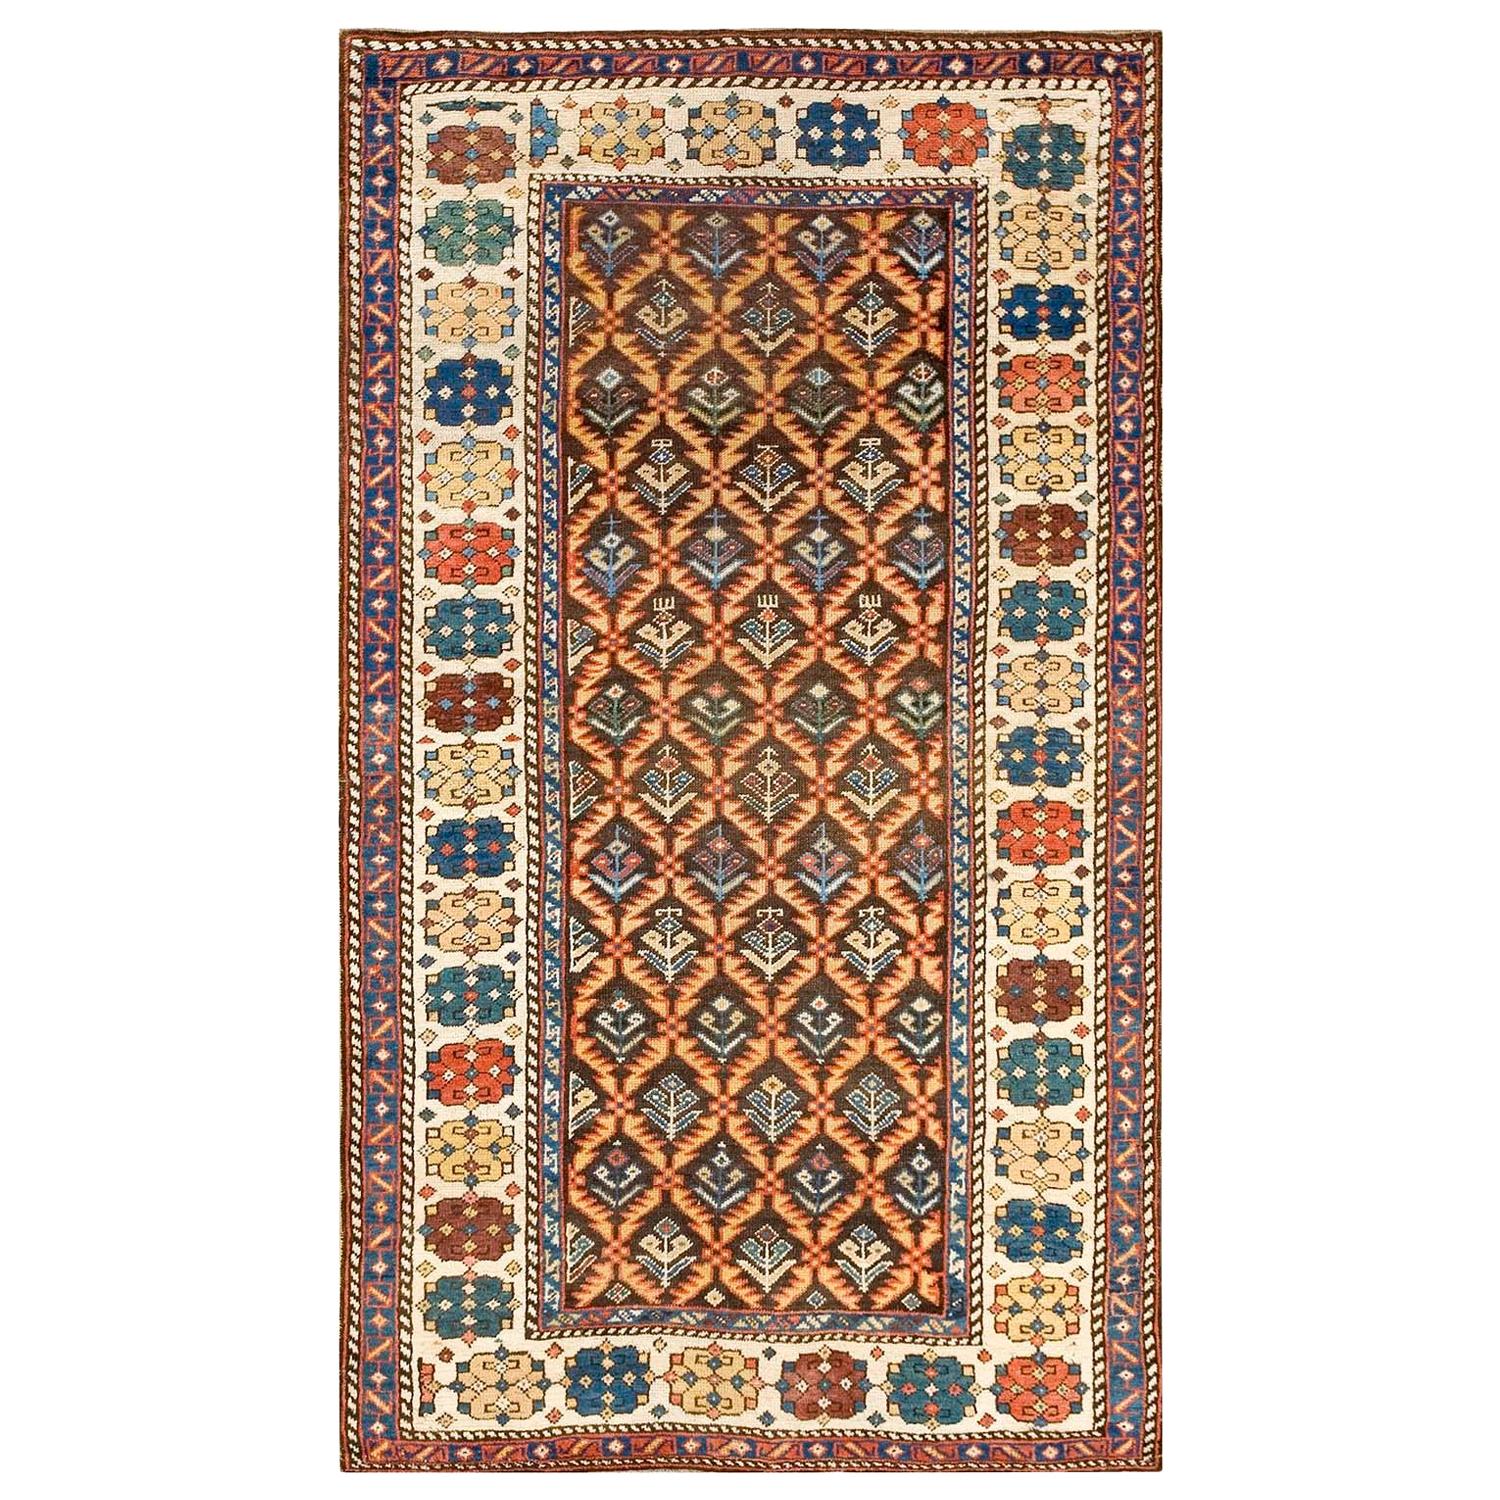 Late 19th Century Caucasian Karabagh Carpet ( 3'10" x 6'6" - 116 x 198 ) For Sale